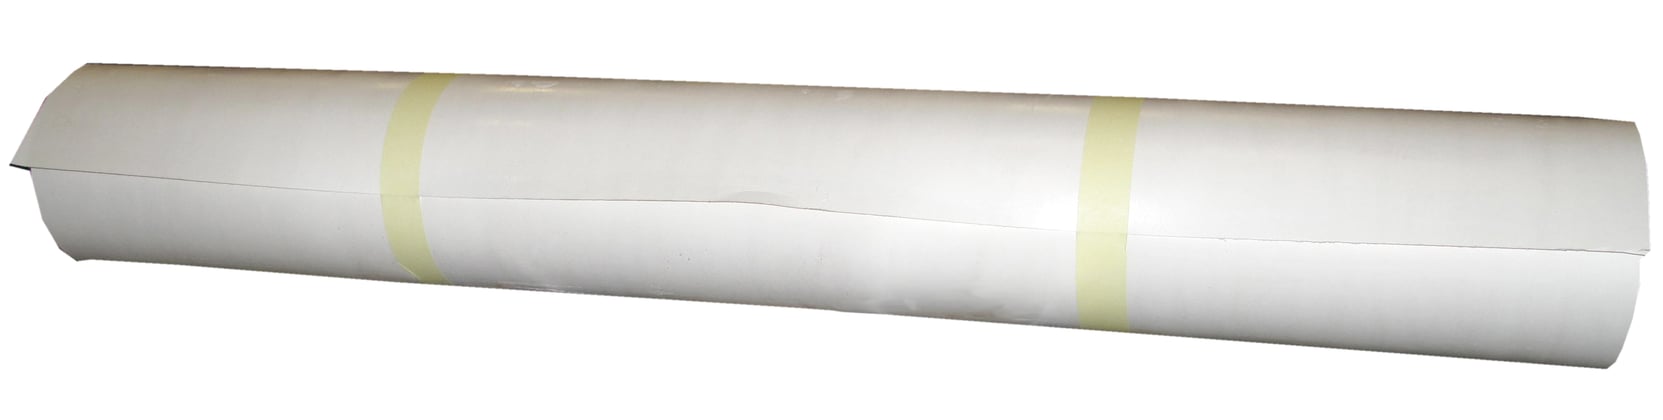 Stucloper basis 290-370gr wit ca. 130cm 60m2